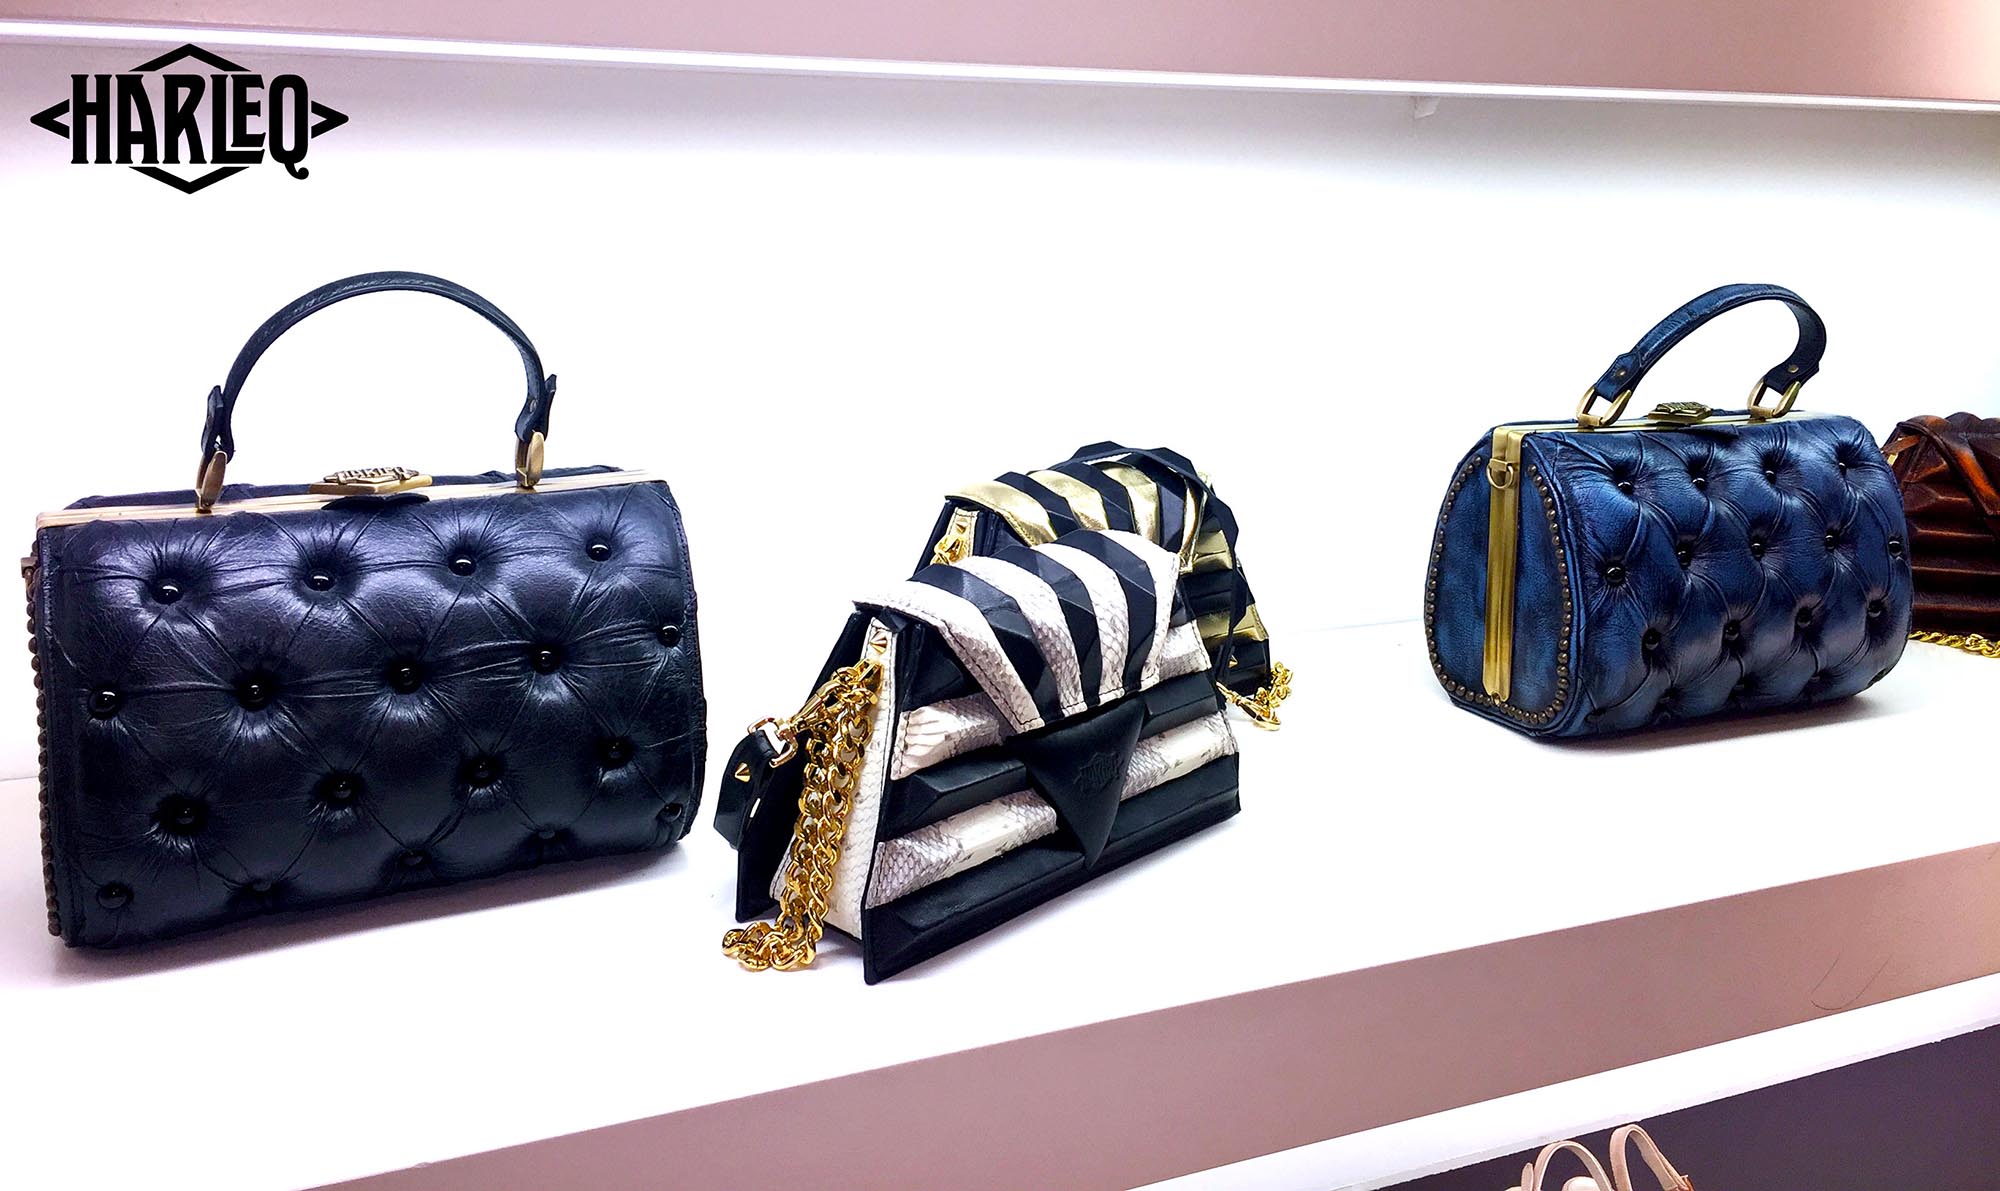 harleq-handbags-luxury-leathers-paris-shop